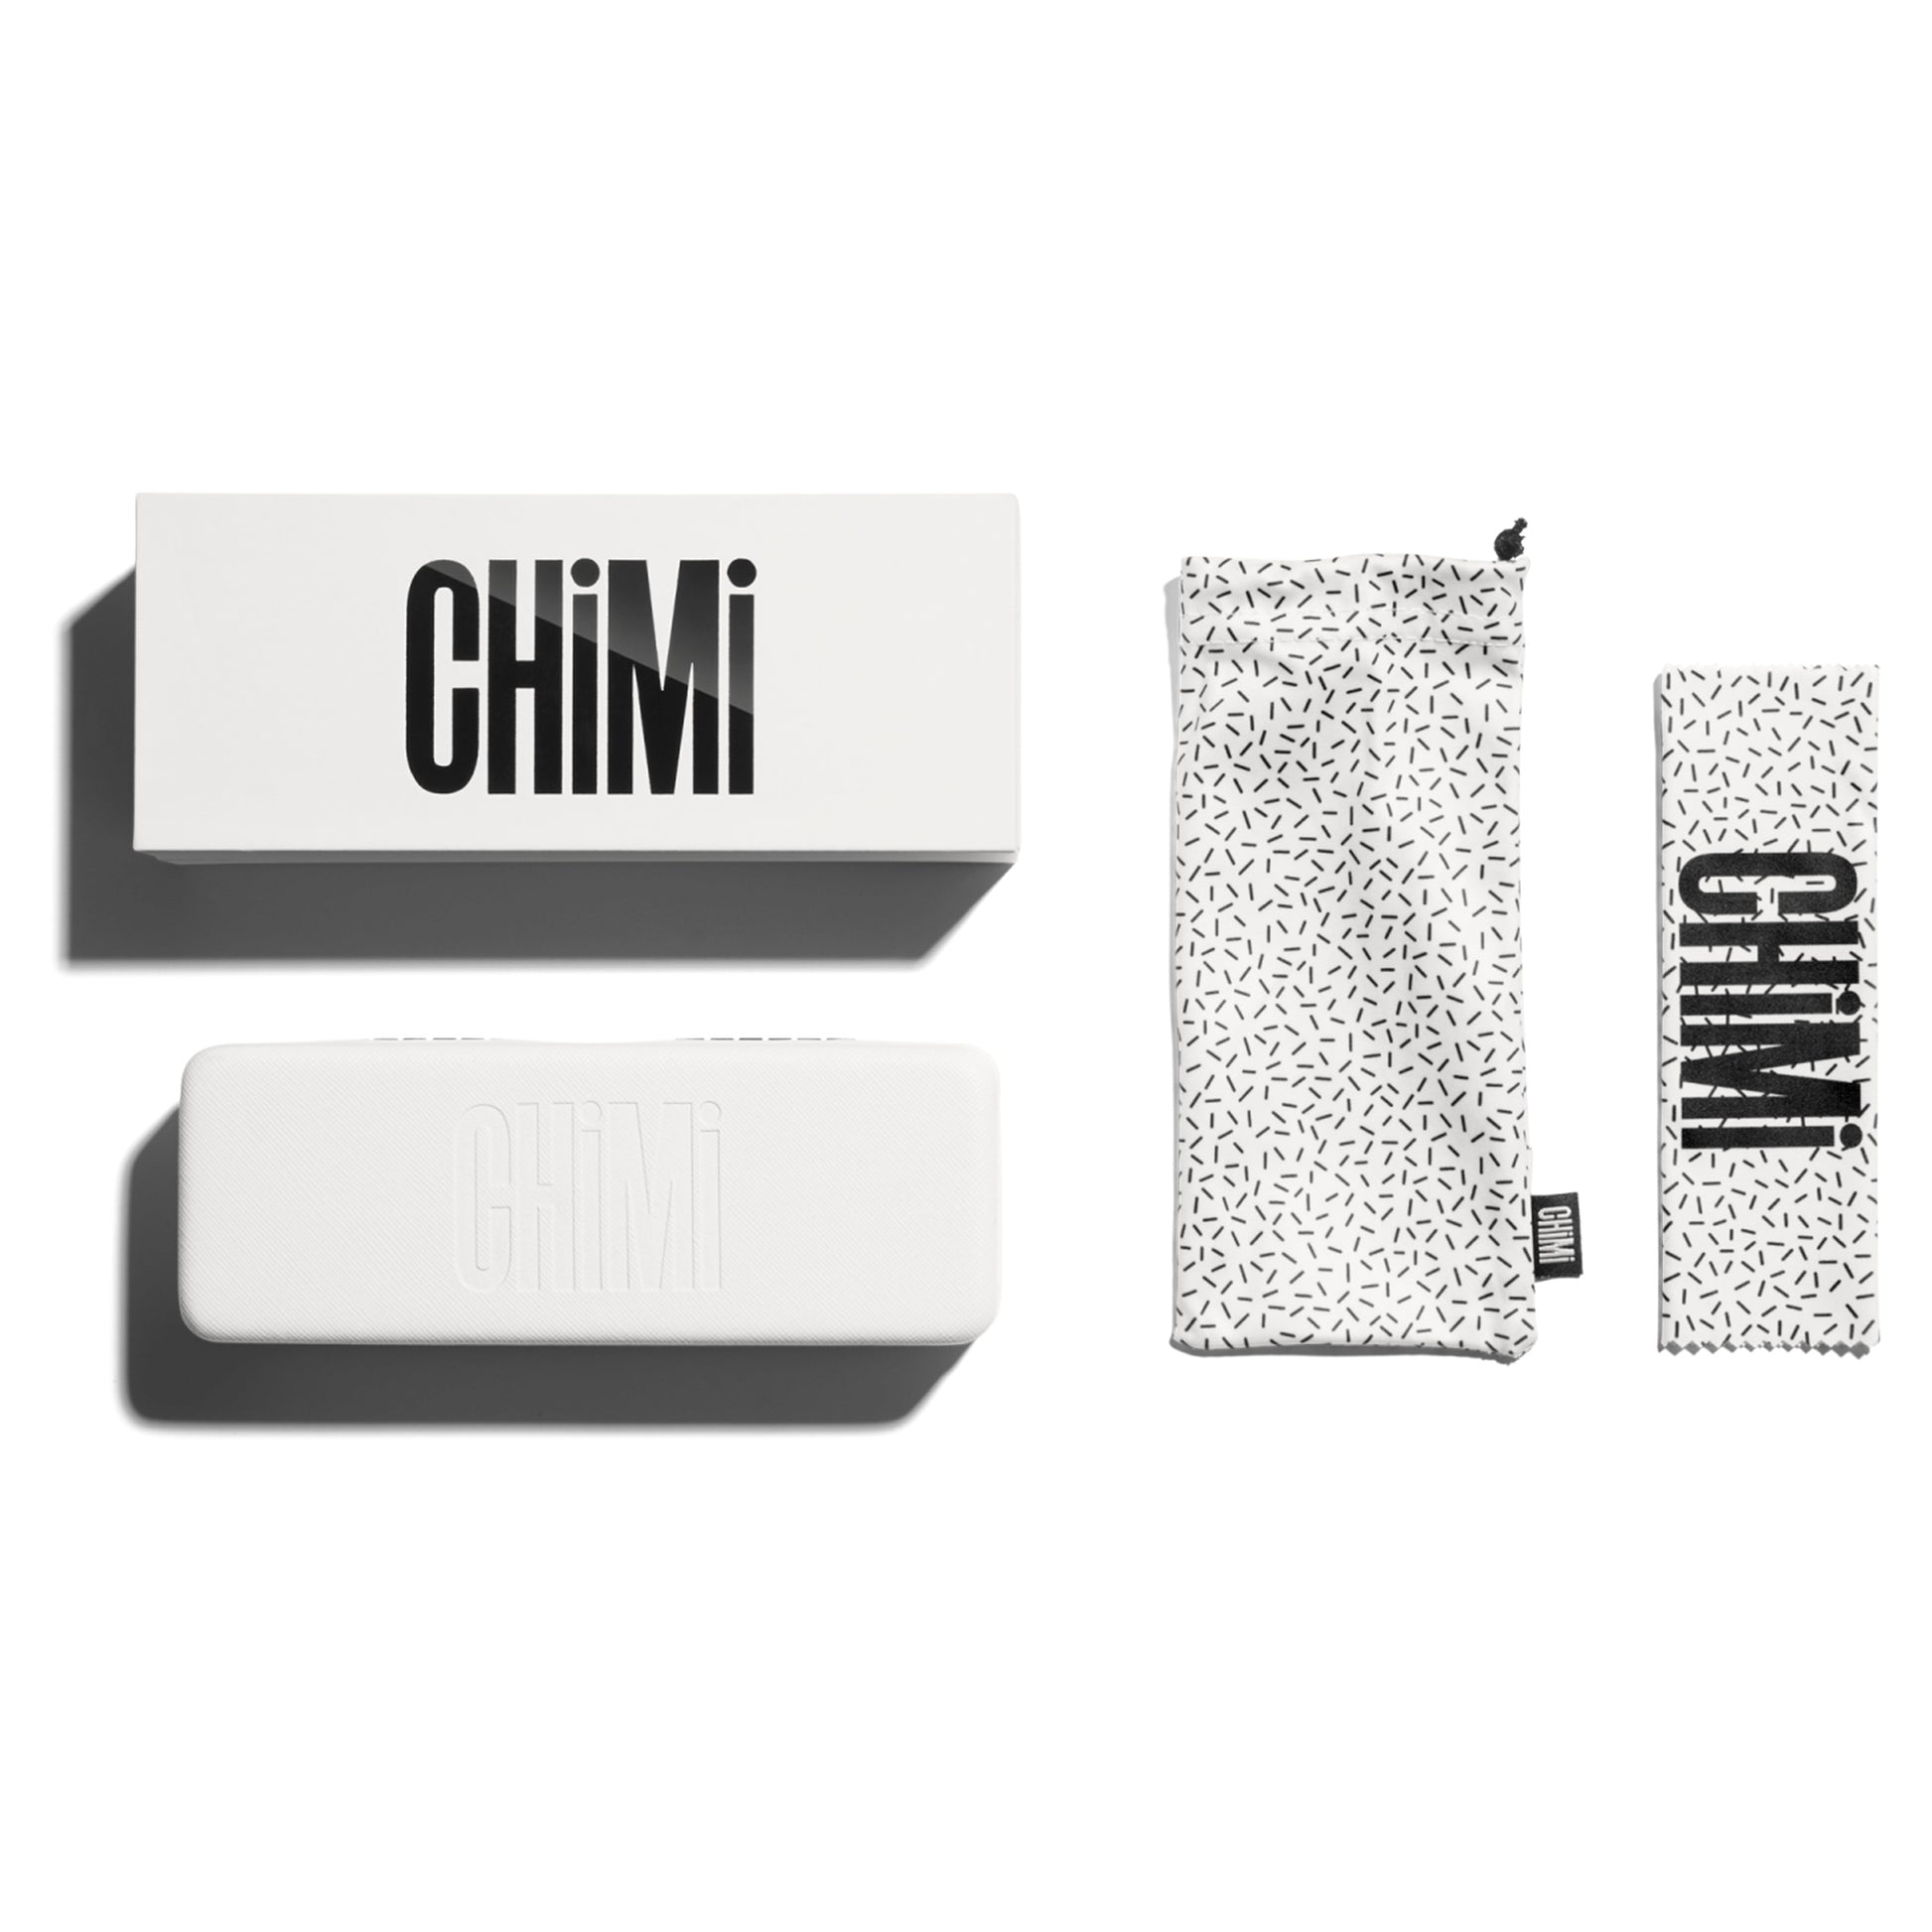 Chimi 004 Litchi Black Sunglasses Eyewear Packaging